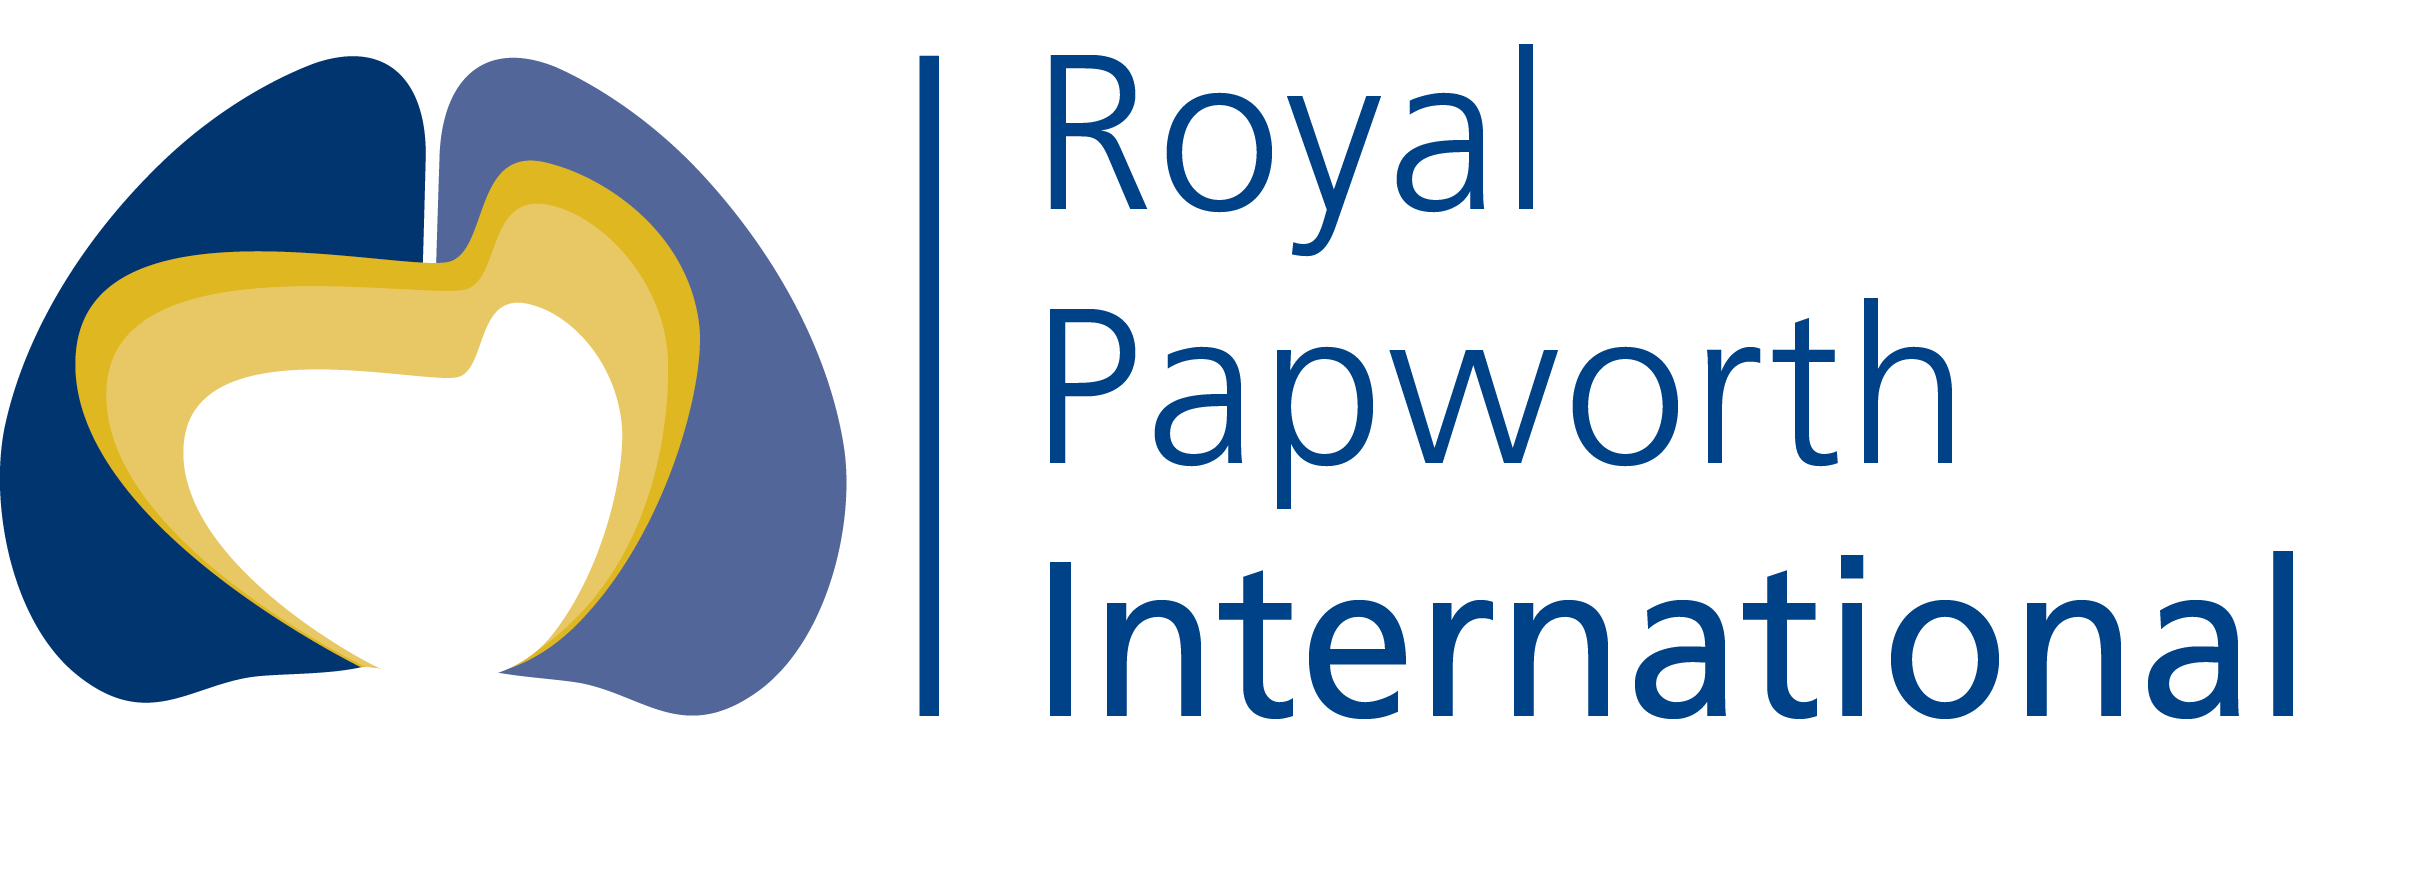 RoyalPapworthHospital_International.png